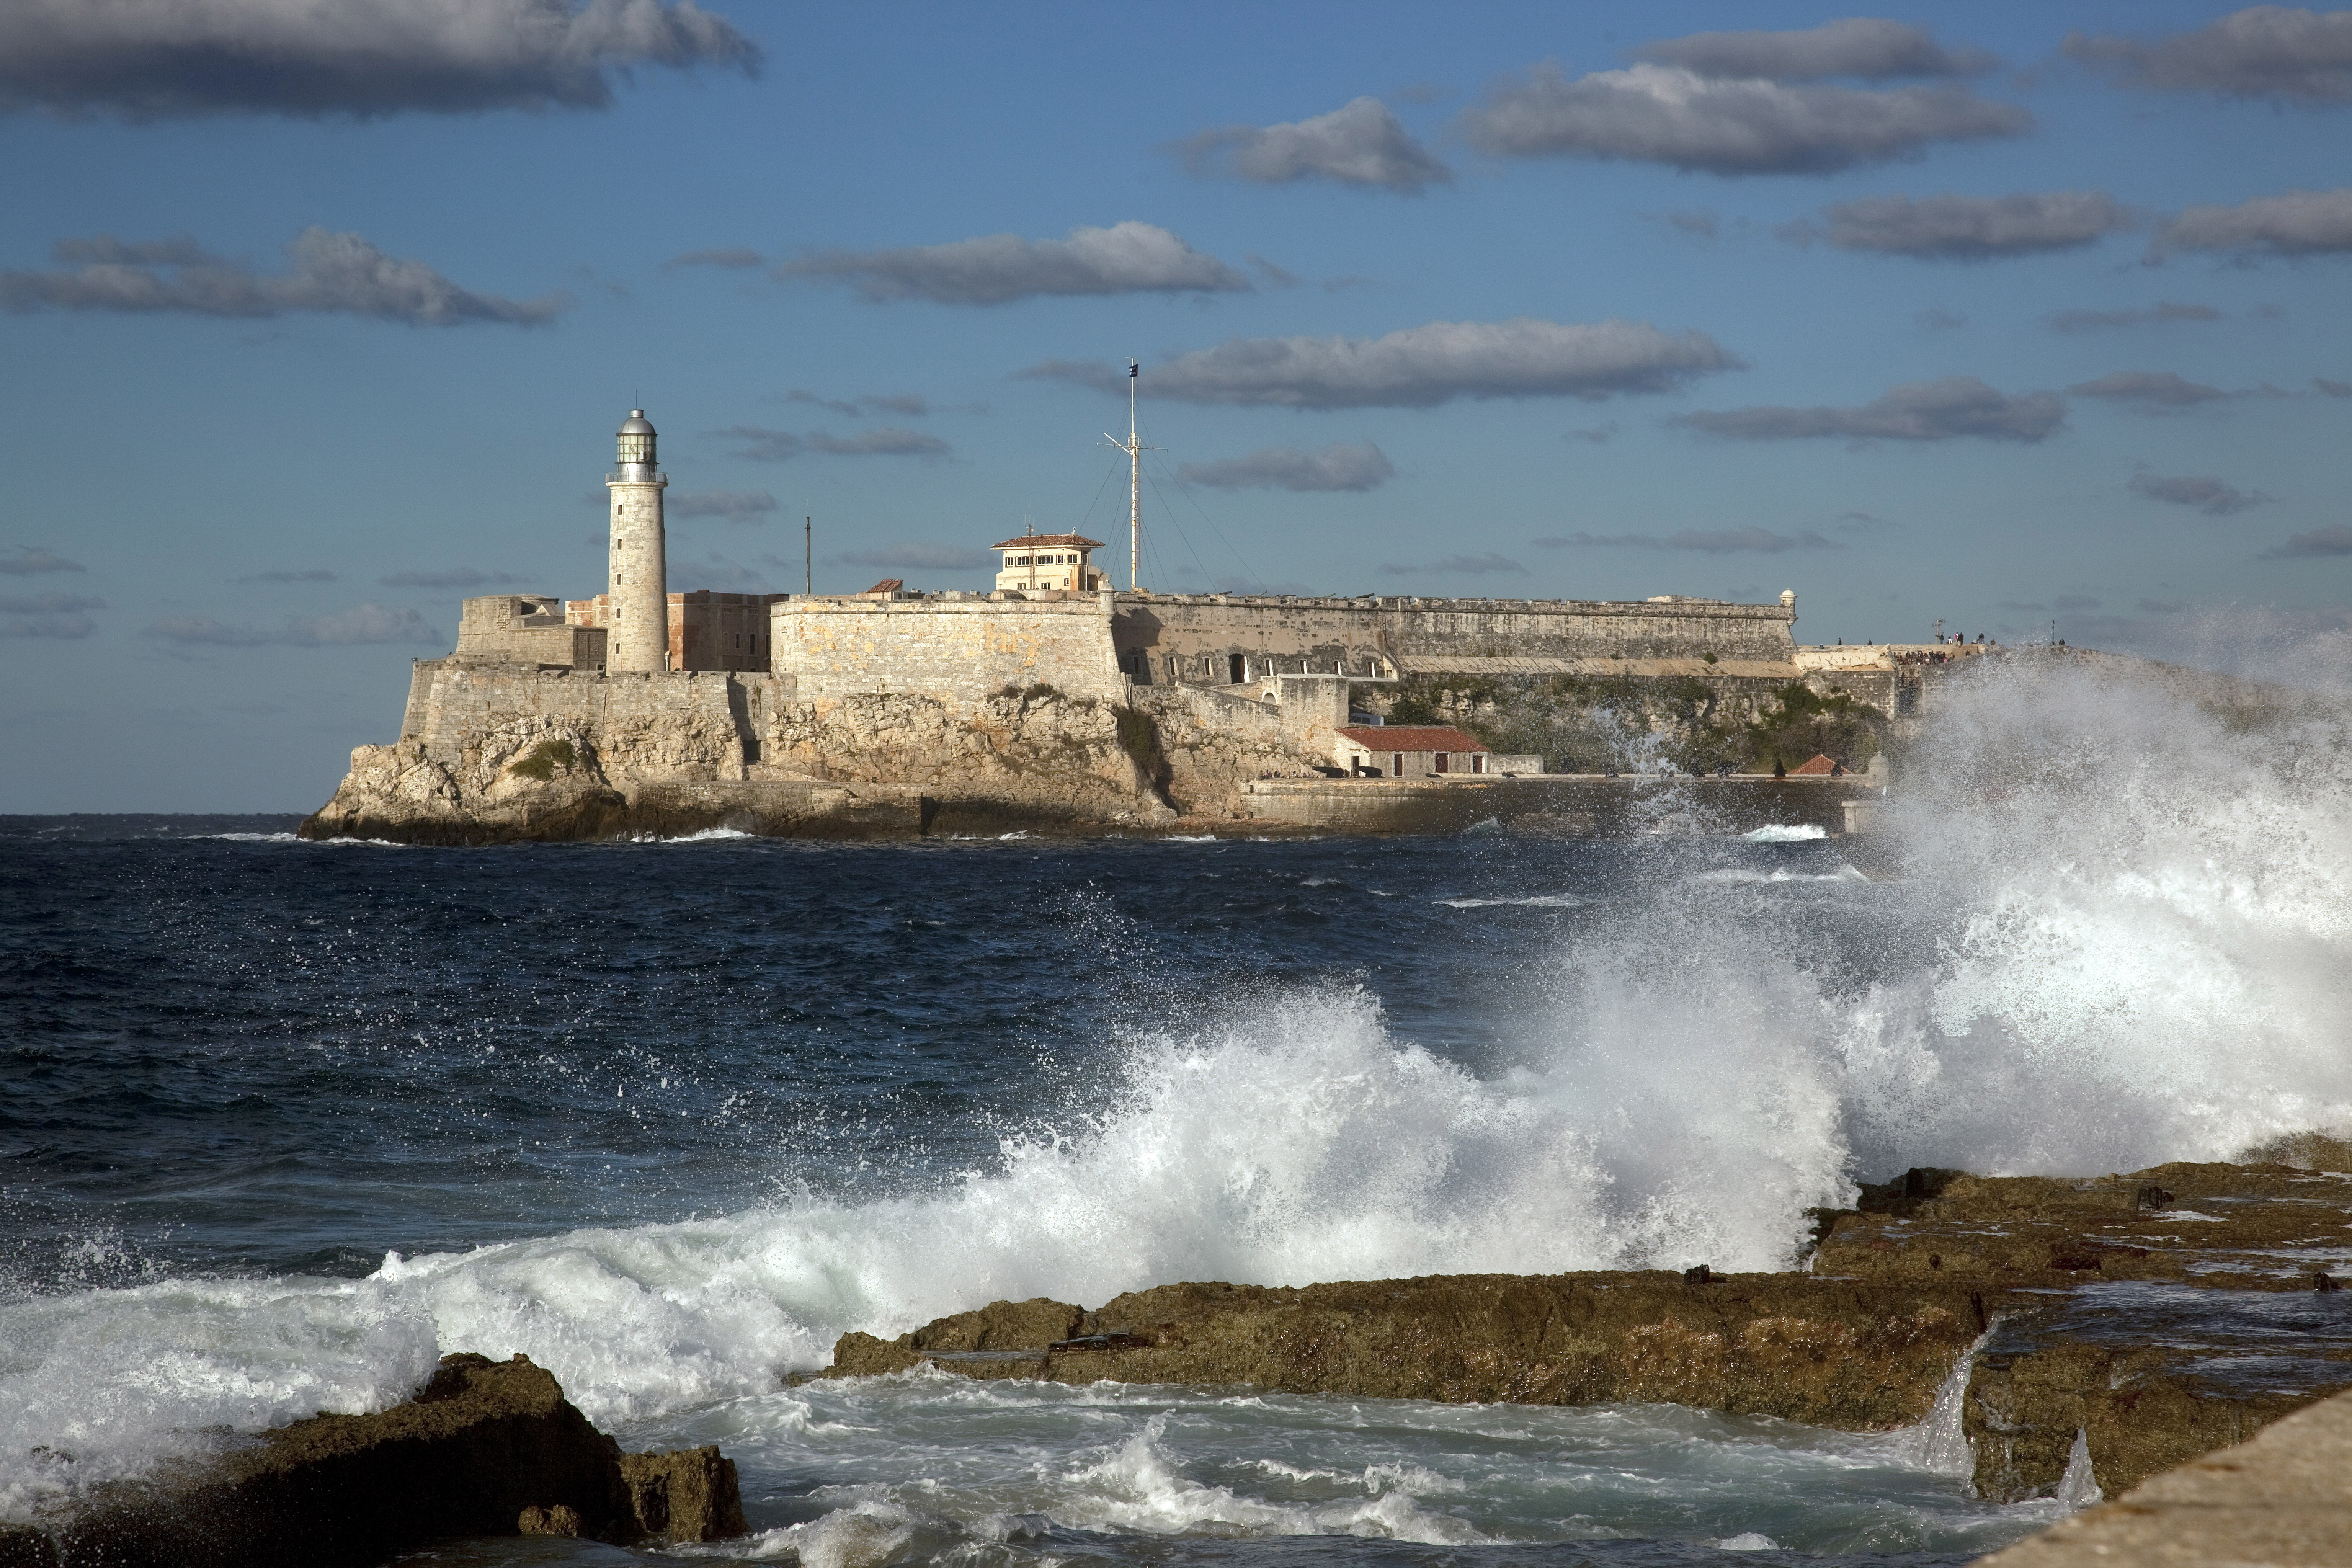 Morro Castle and Sea in Havana, Cuba image - Free stock photo ...